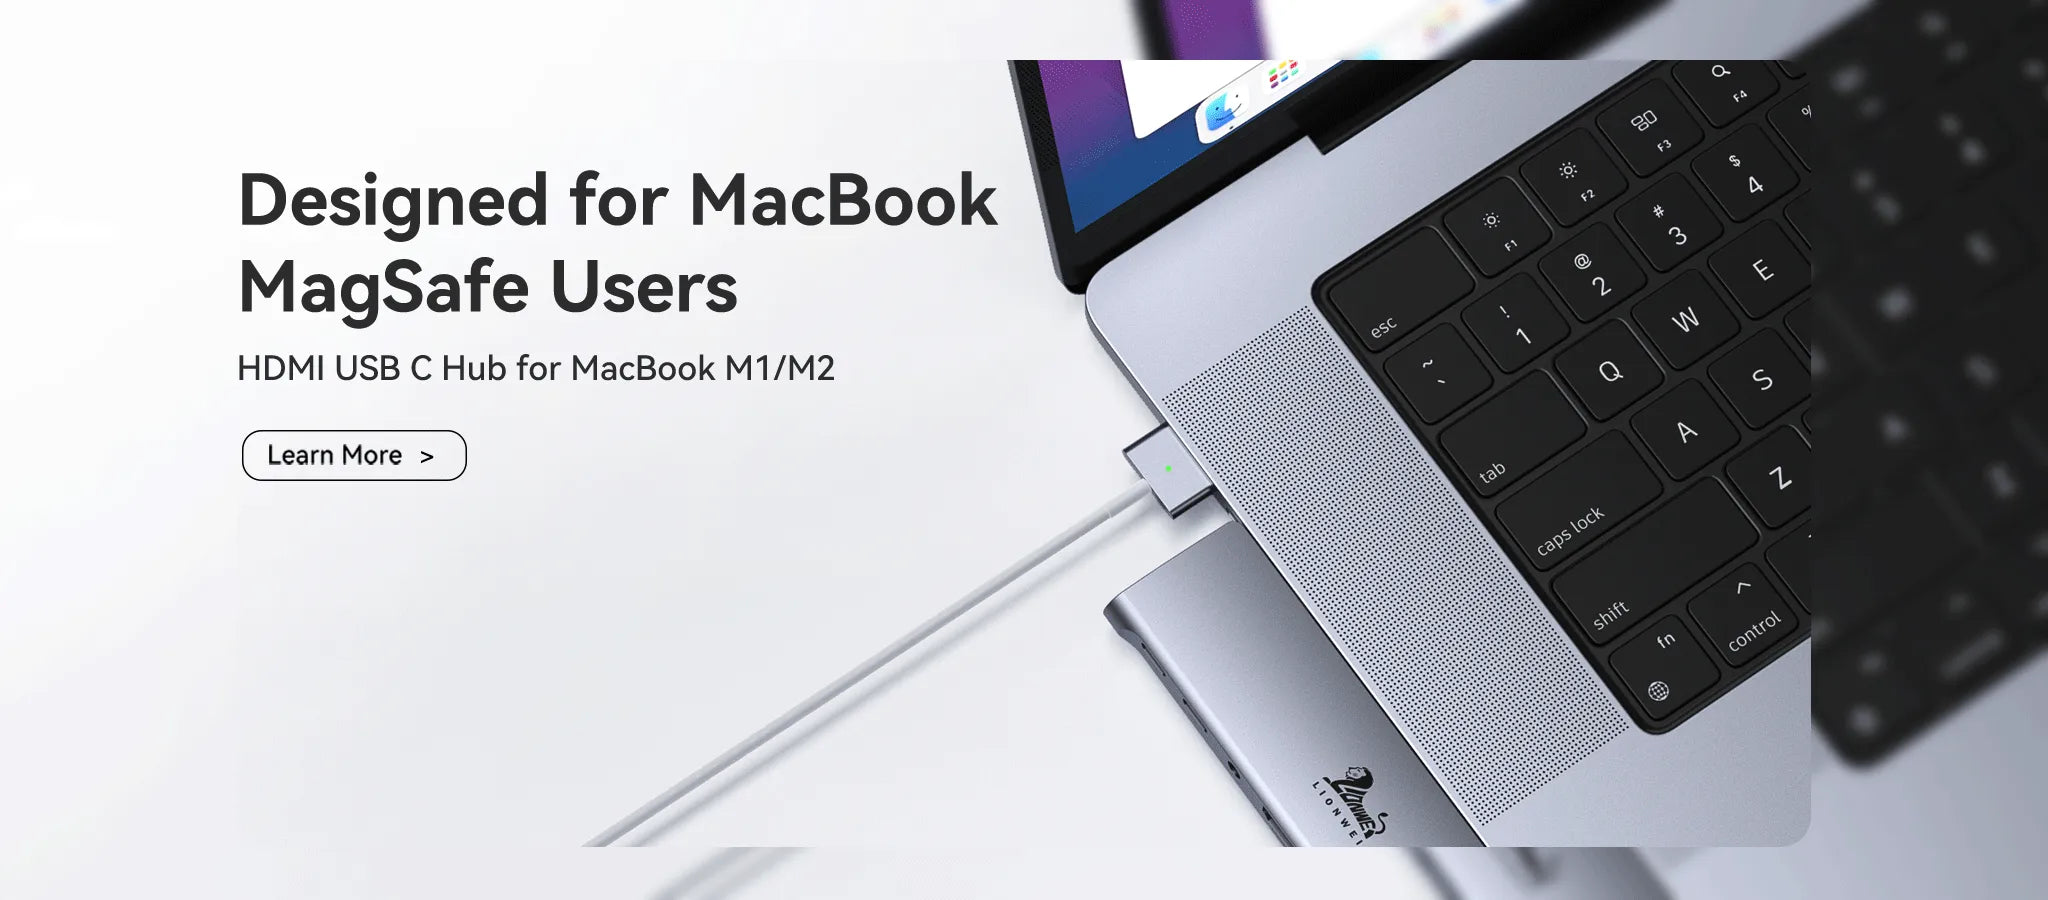 HDMI USB C Hub for MacBook M1/M2